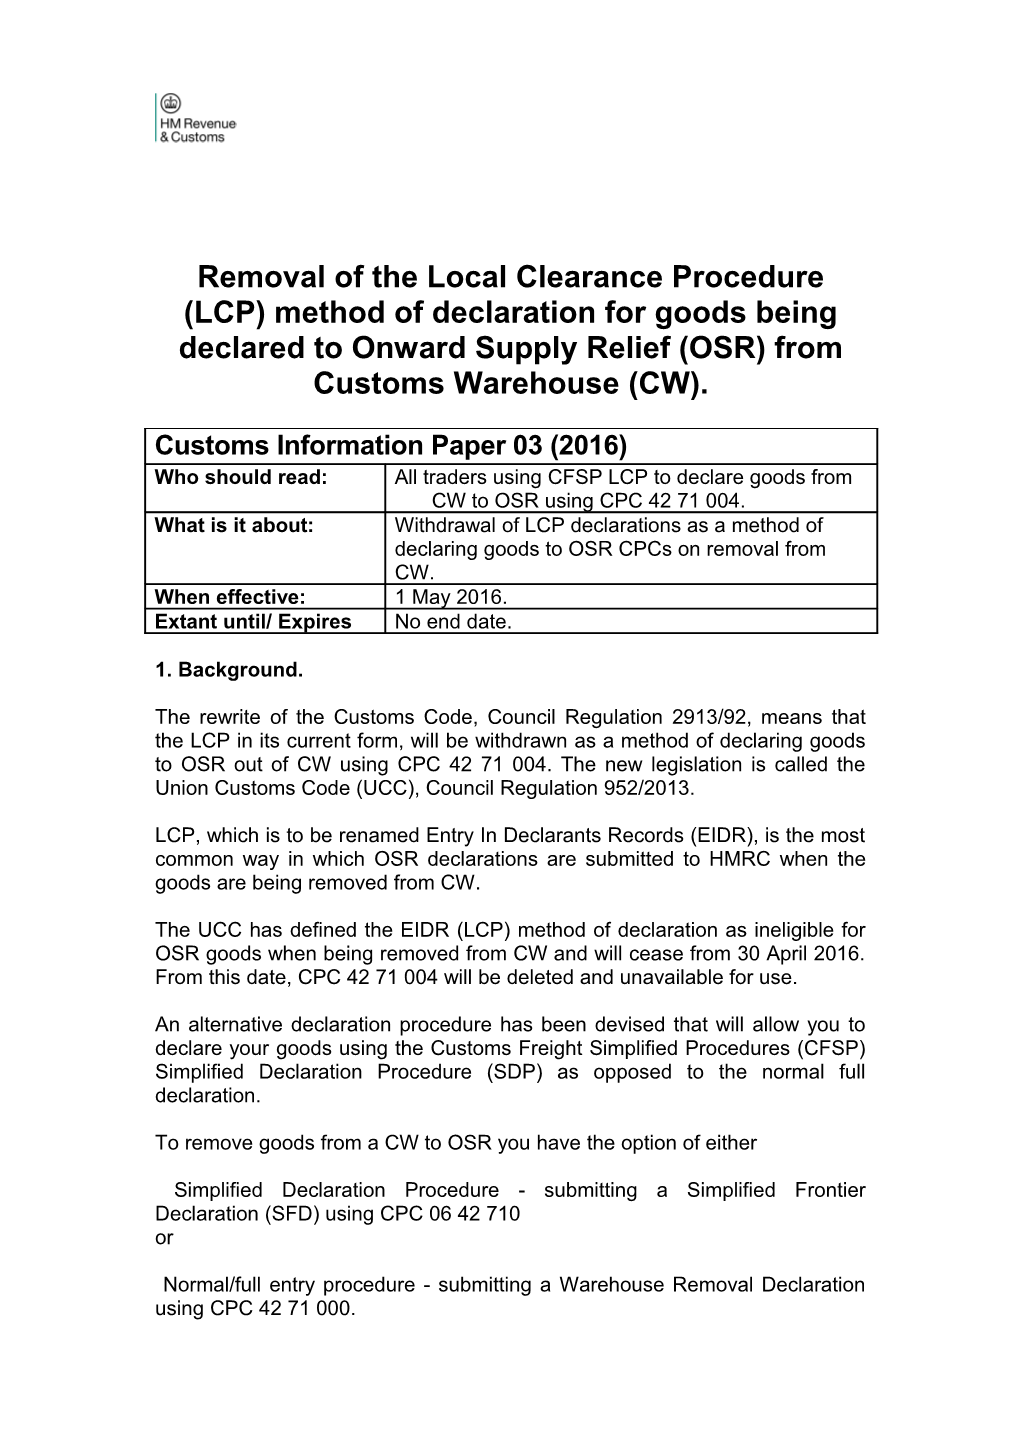 Customs Information Paper 03(2016)